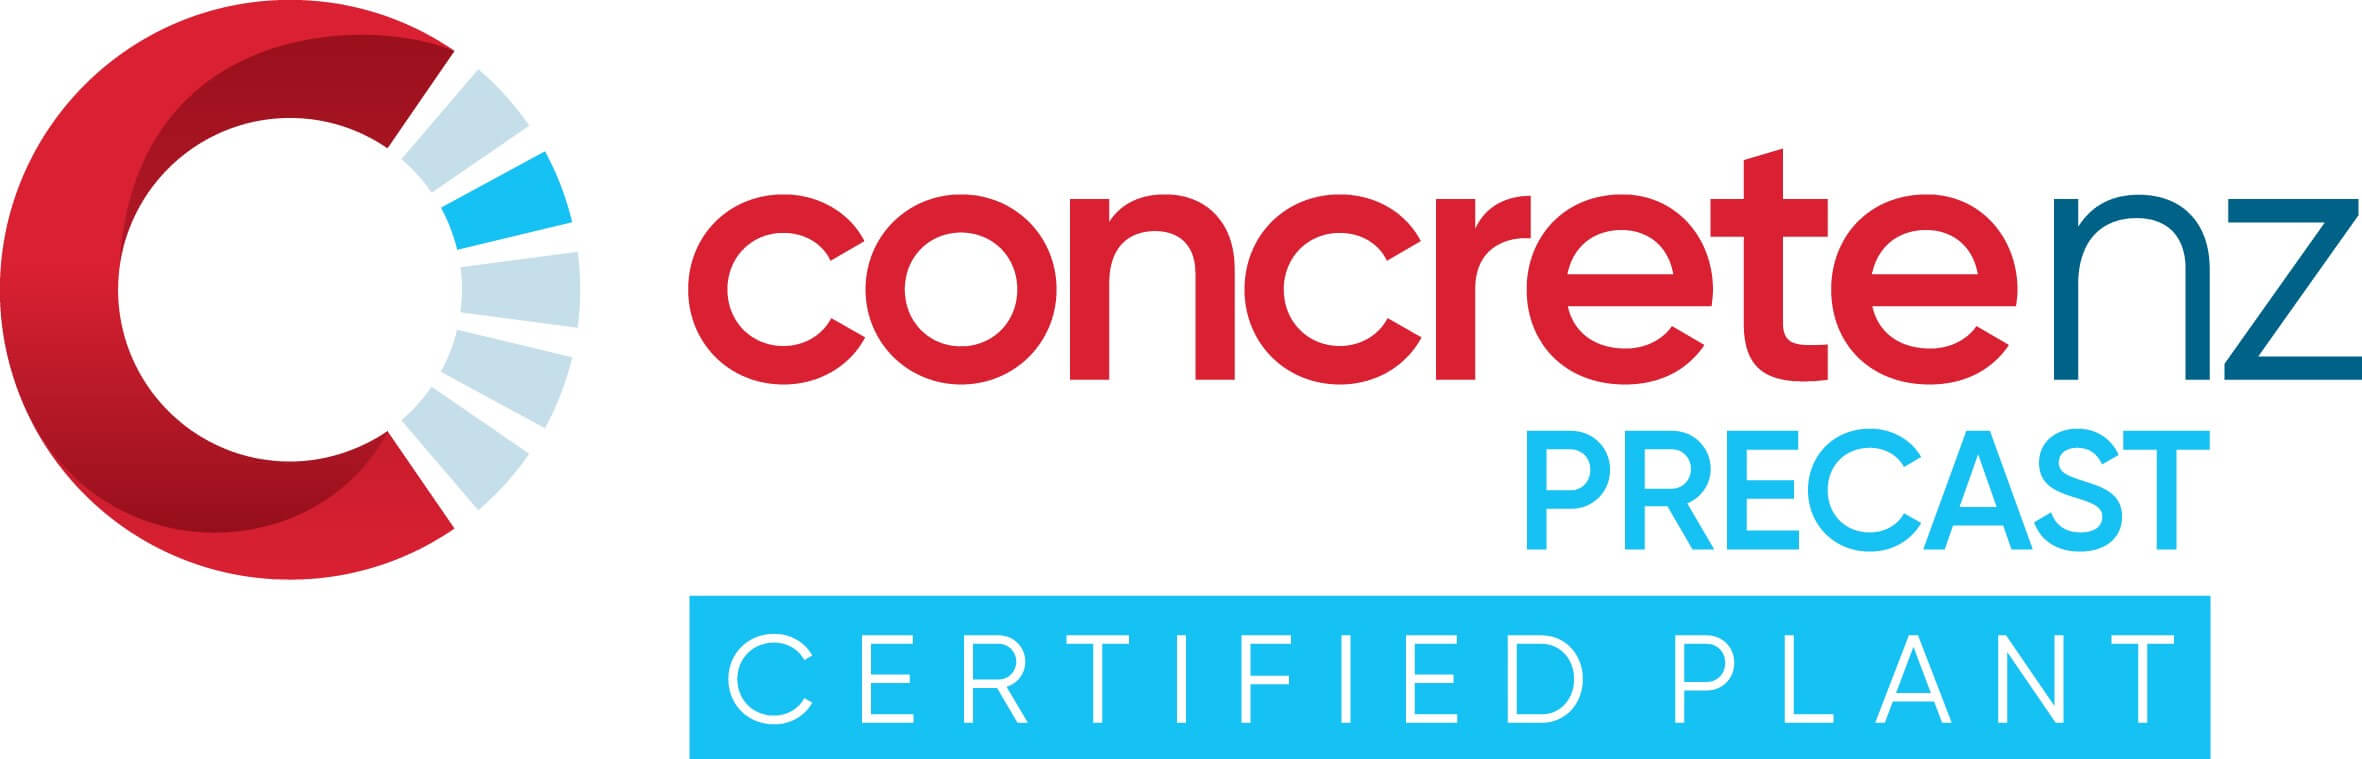 Concretenz Wide Precast Certified Plant Logo